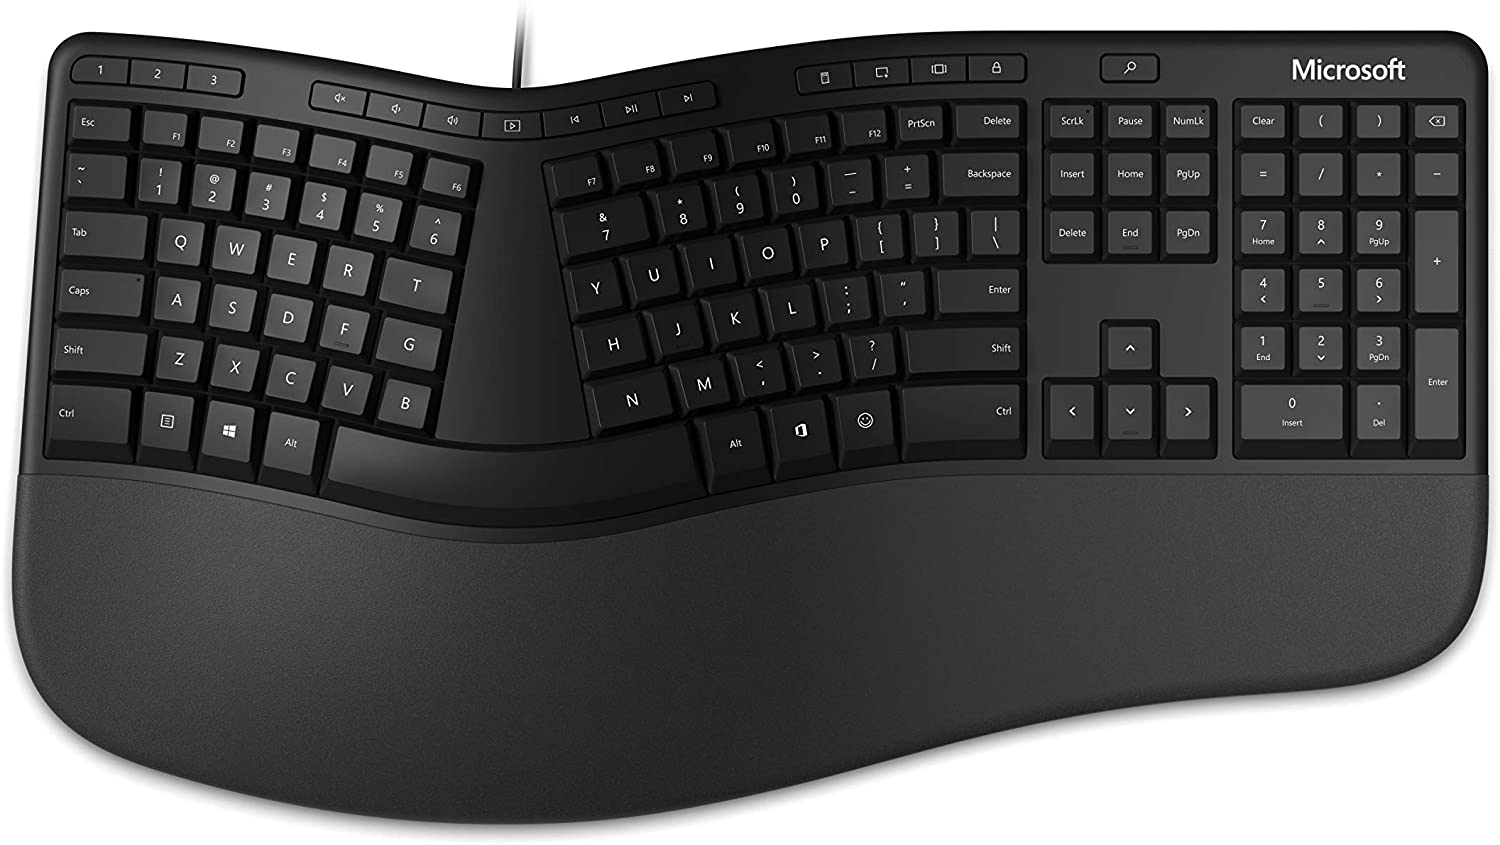 Microsoft MS Ergonomic Keyboard for Business